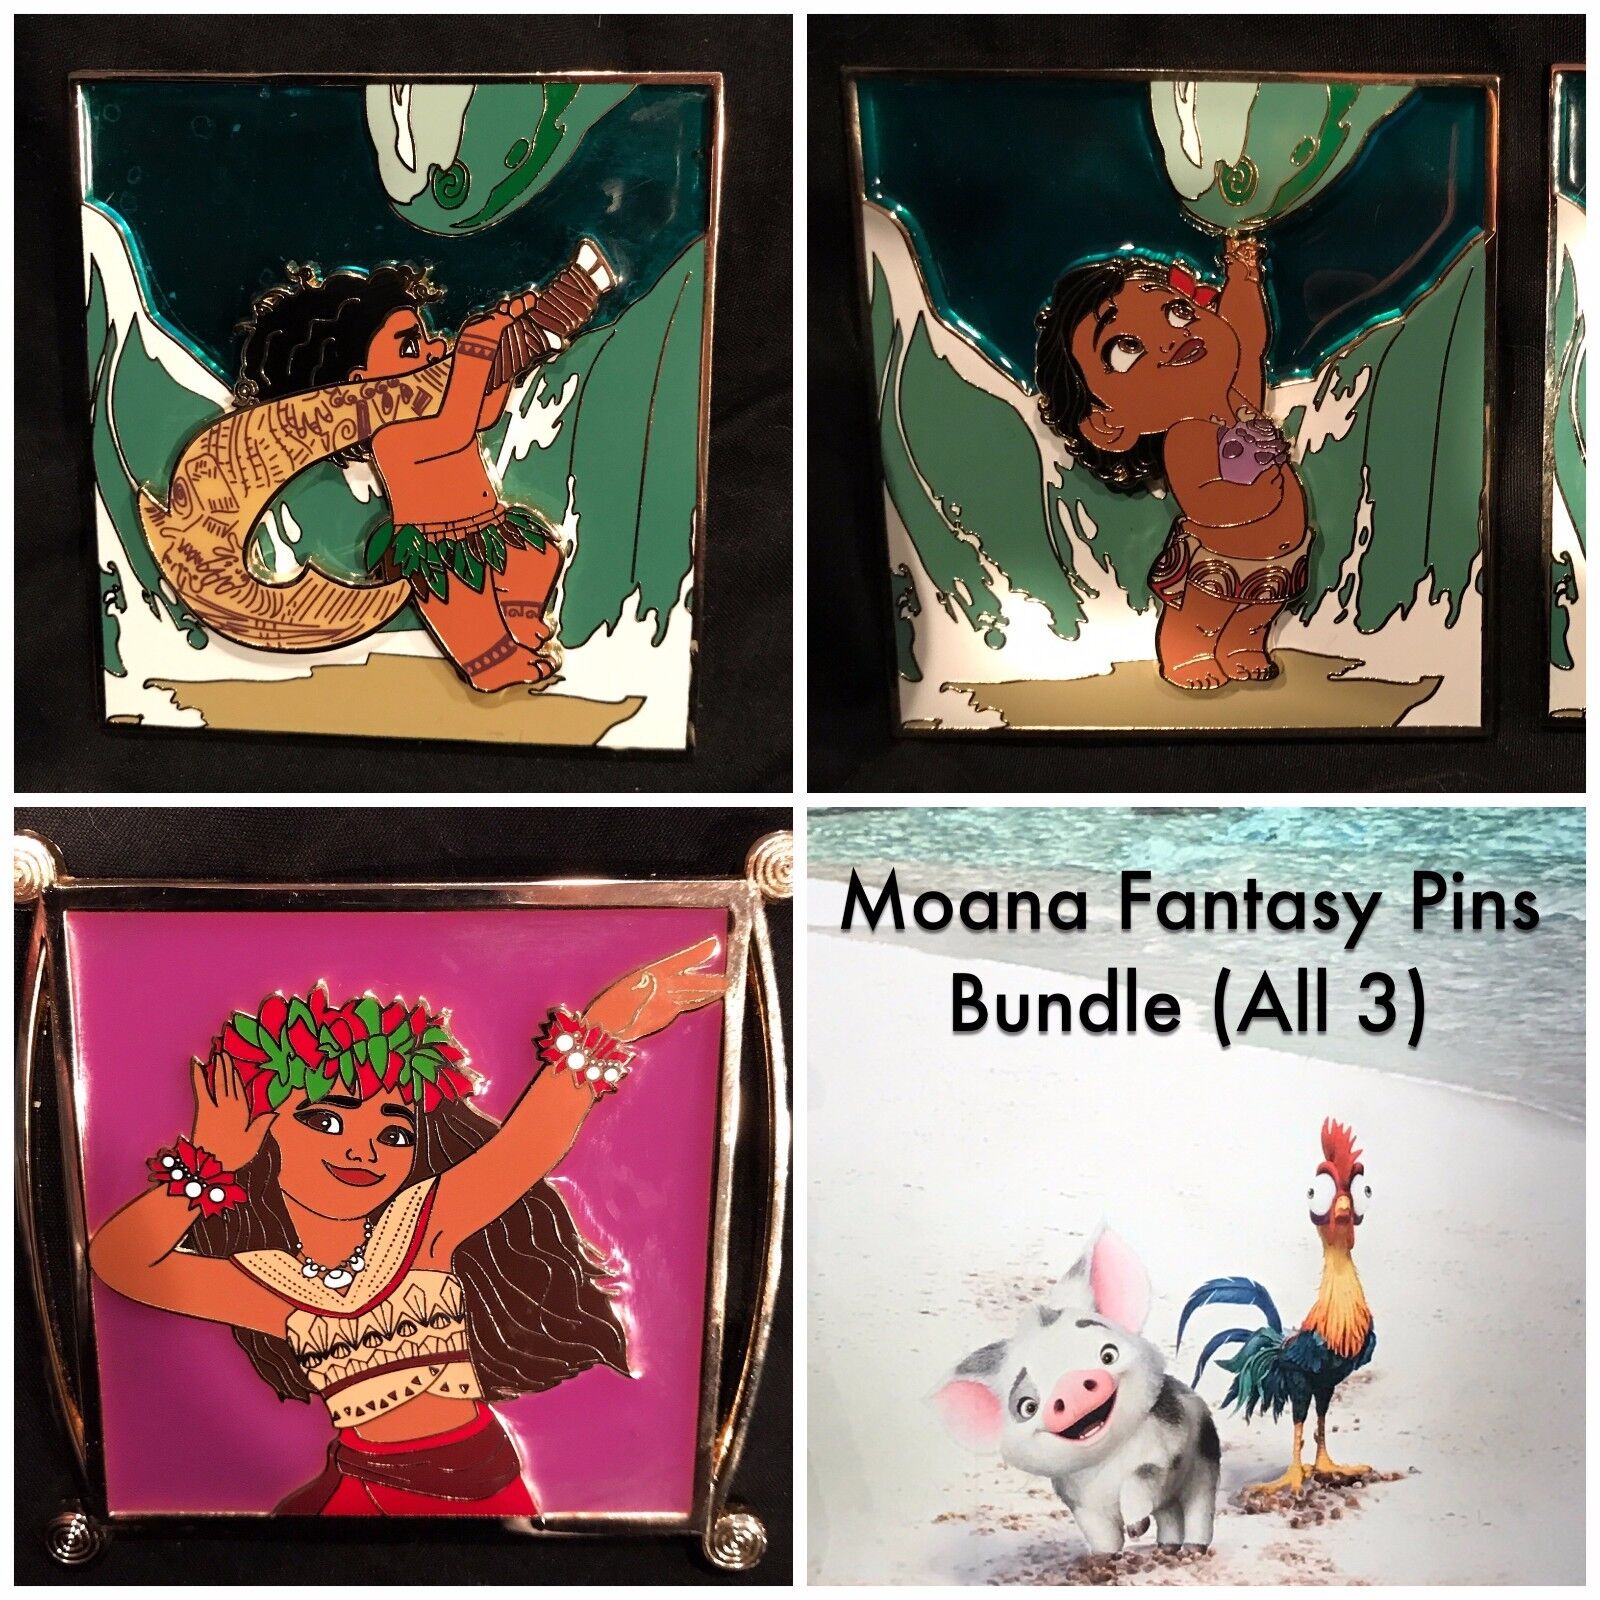 Disney Moana Maui Fantasy Pin Bundle of 3 pins